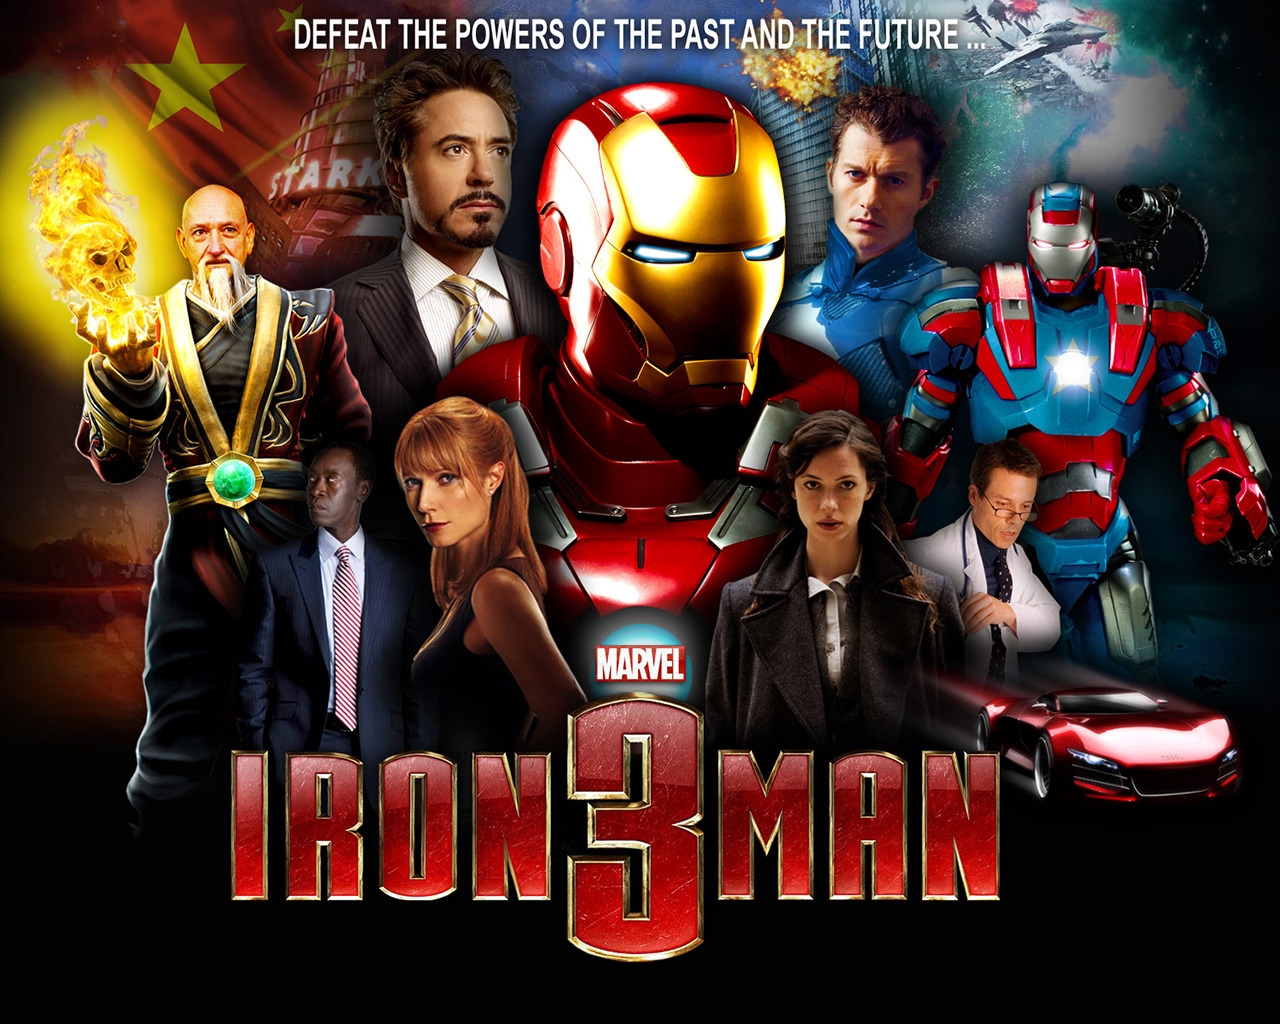 Marvel Iron Man 3 for 1280 x 1024 resolution